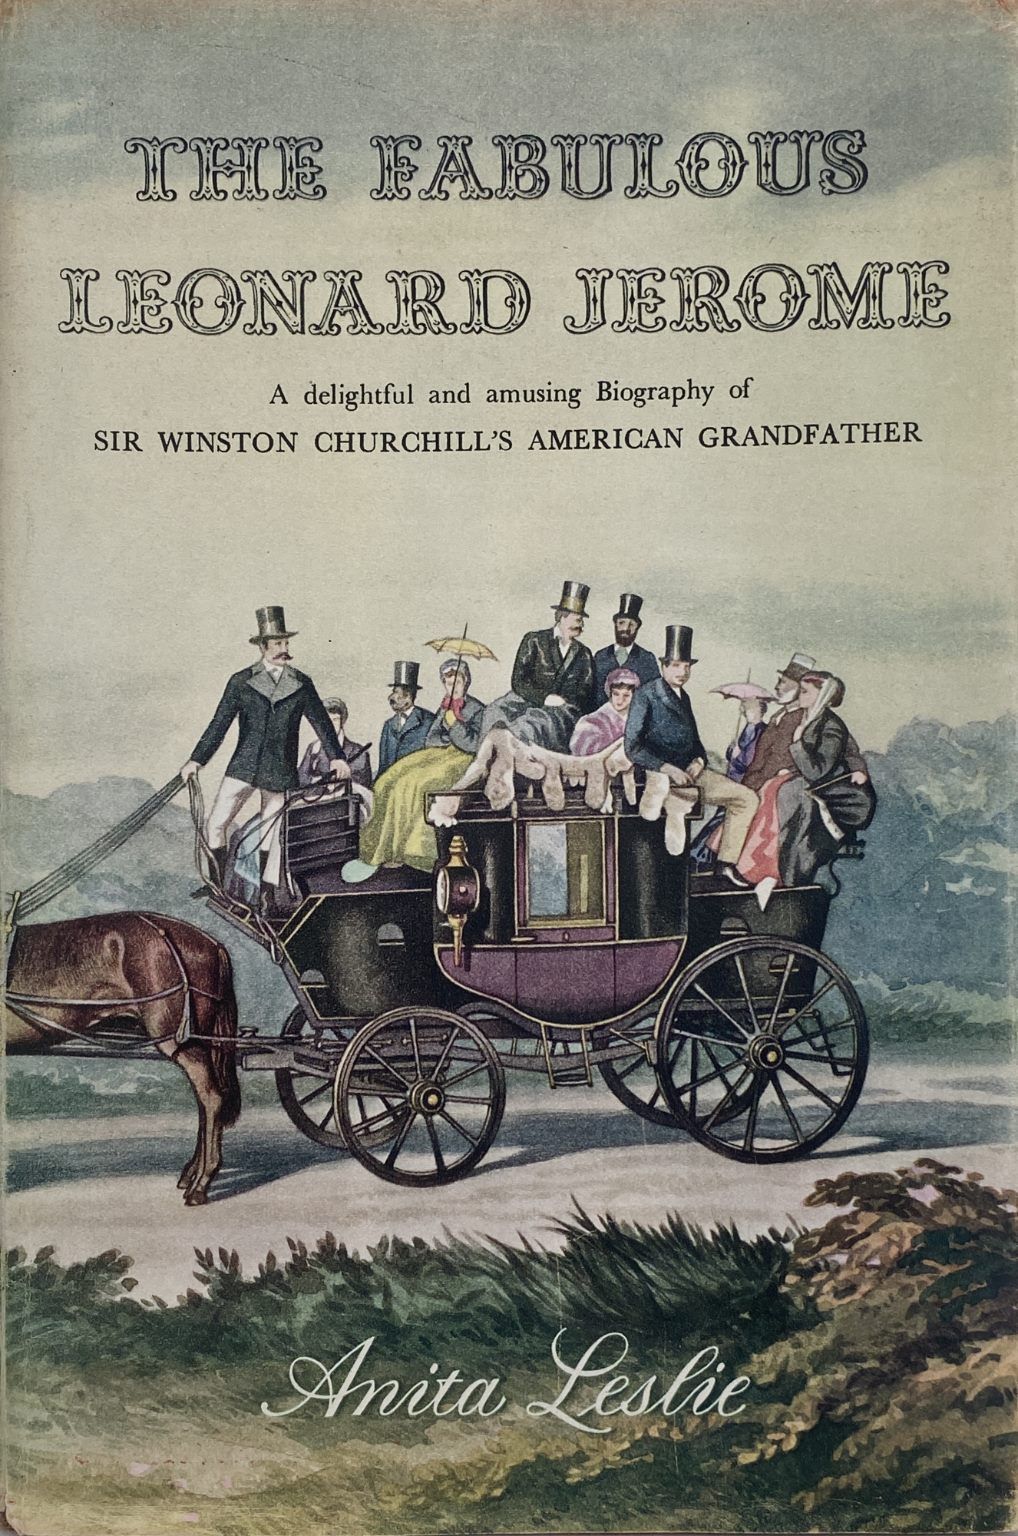 THE FABULOUS LEONARD JEROME Biography of Winston Churchill's Grandfather